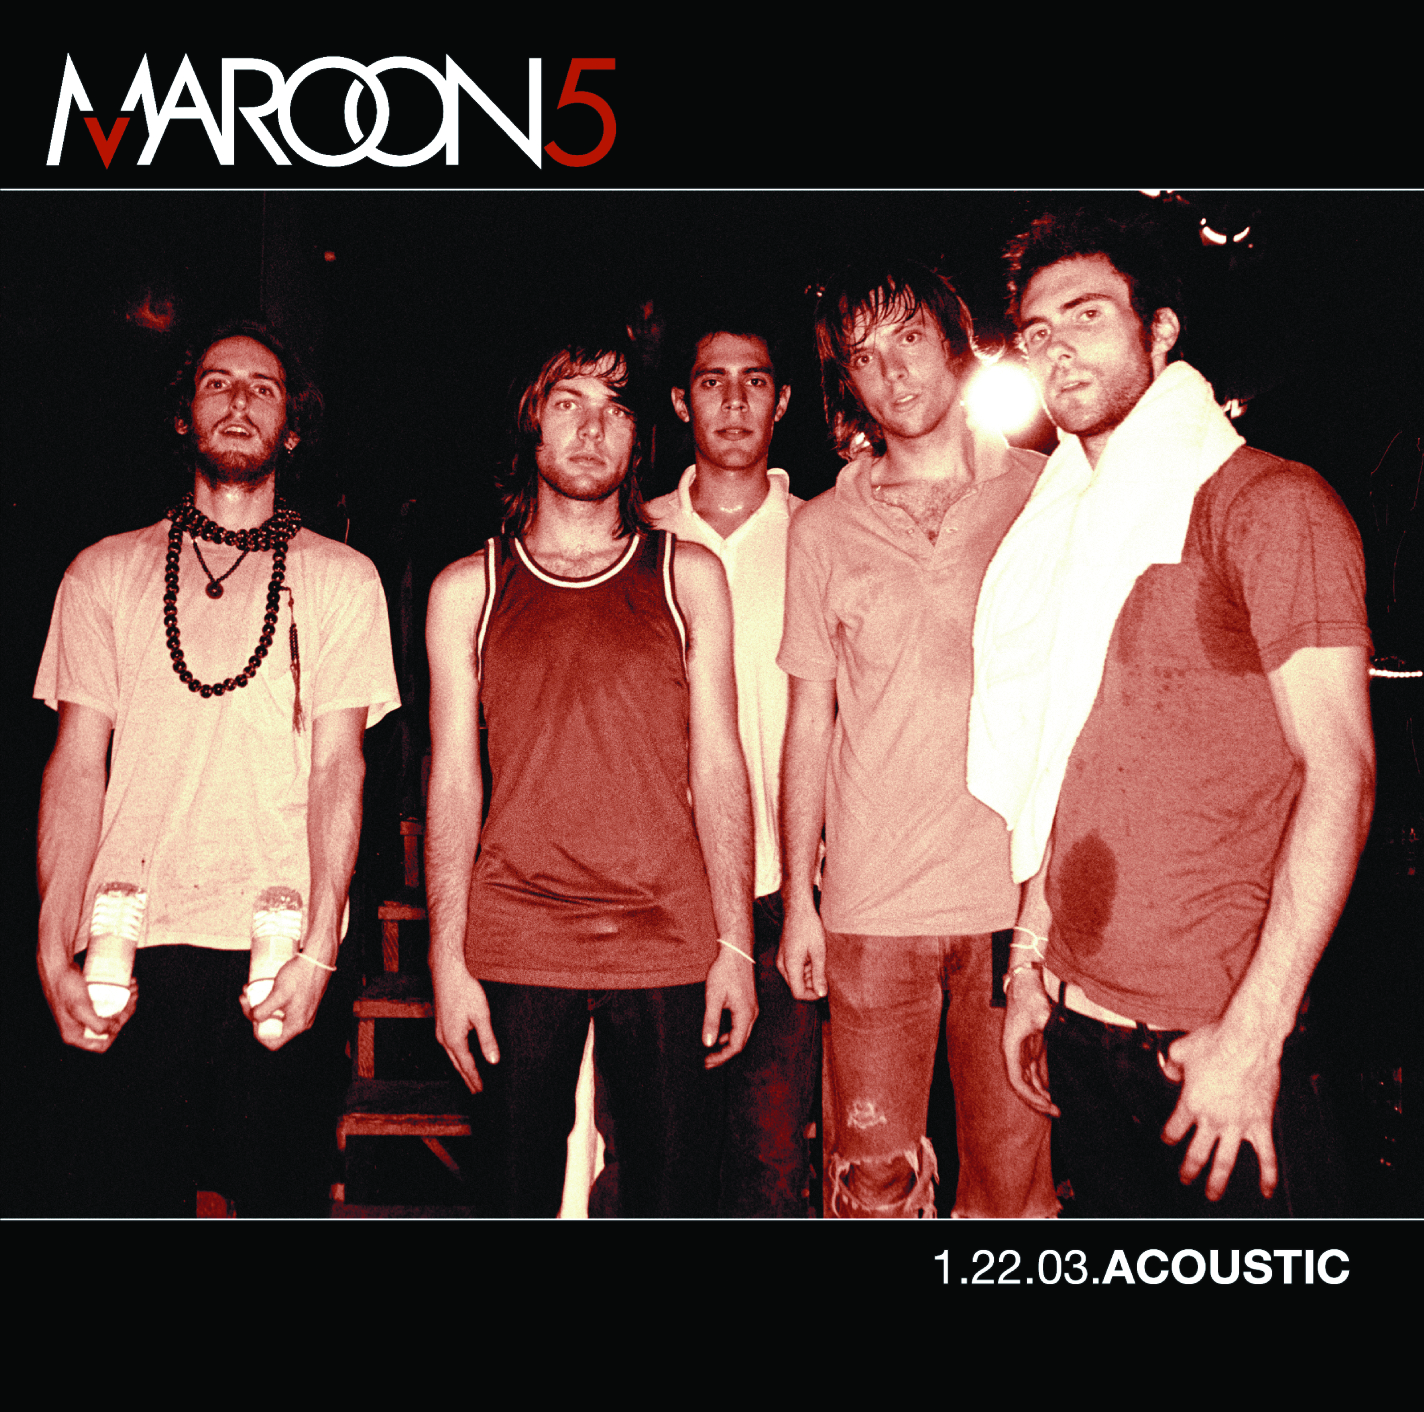 Maroon 5 - Misery (Acoustic)